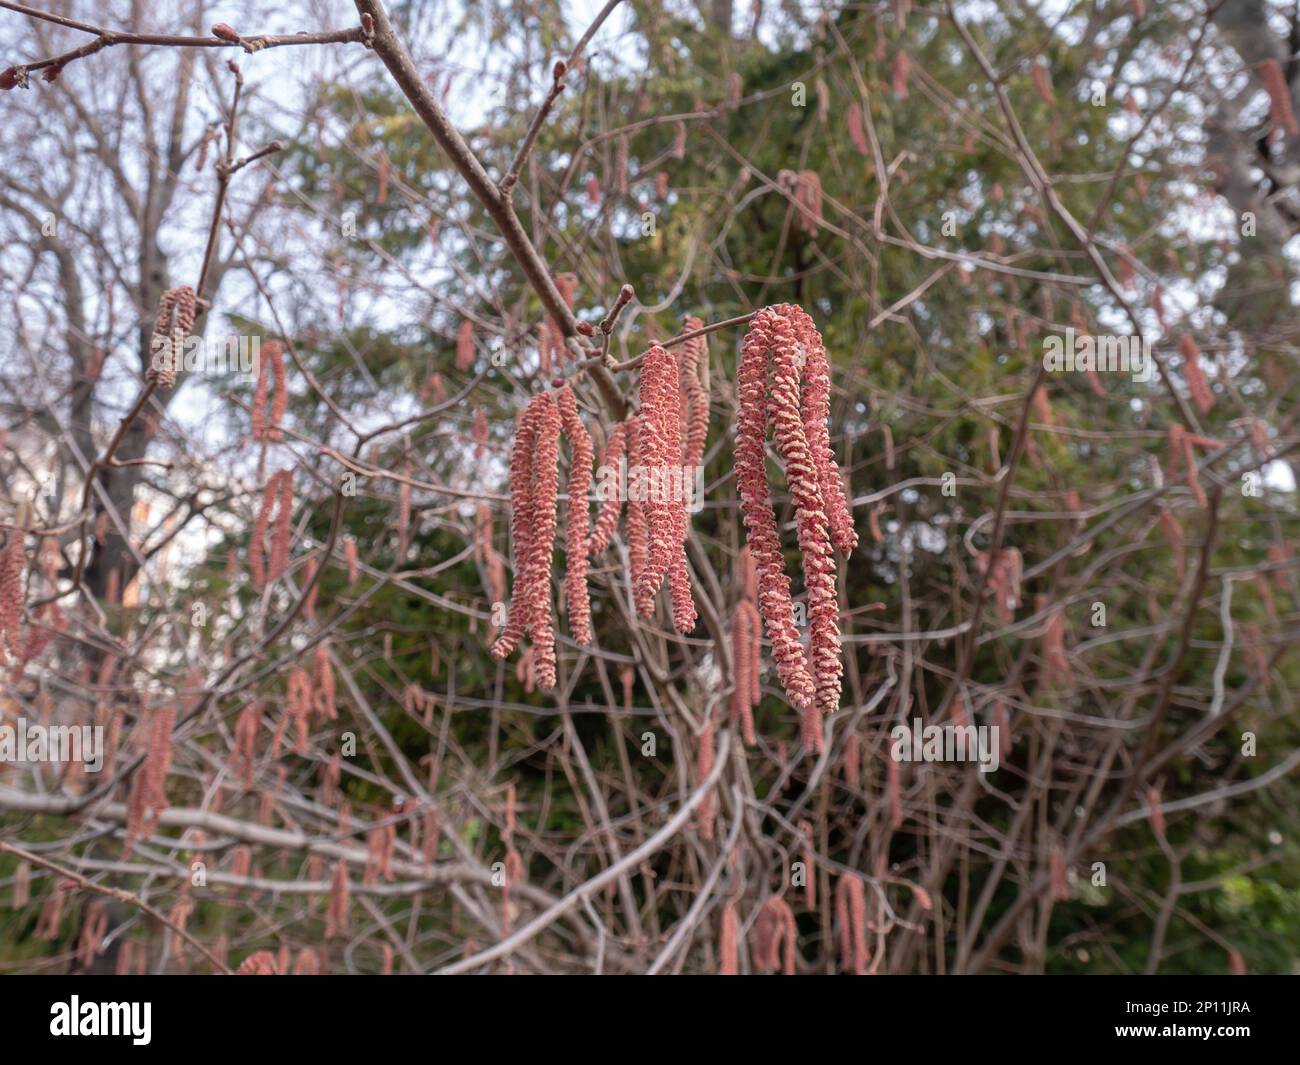 Corylus maxima purpurea, filbert, or hazel plant long wind-pollinated male flowers. Stock Photo